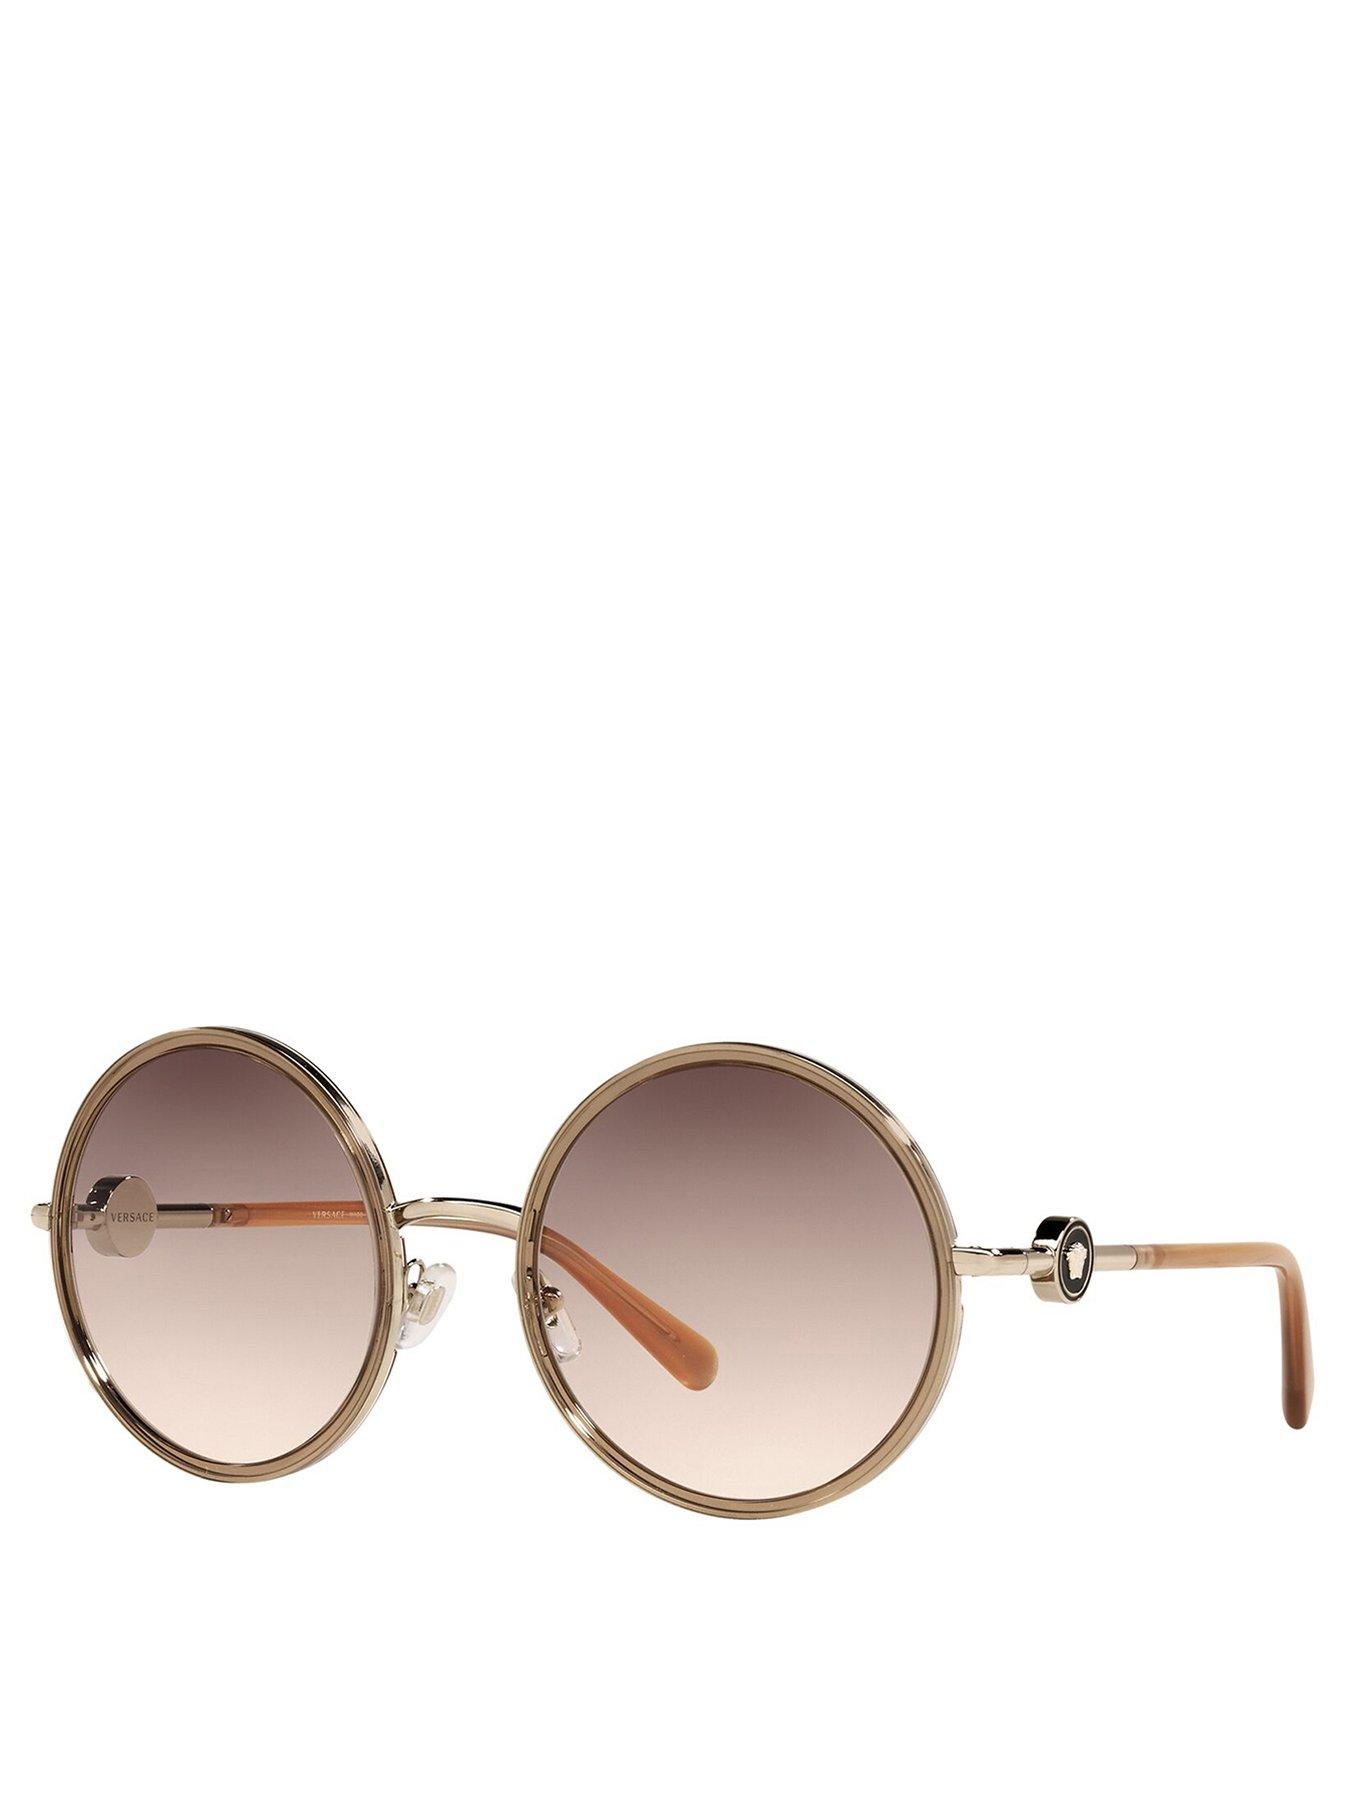  Round Sunglasses - Brown